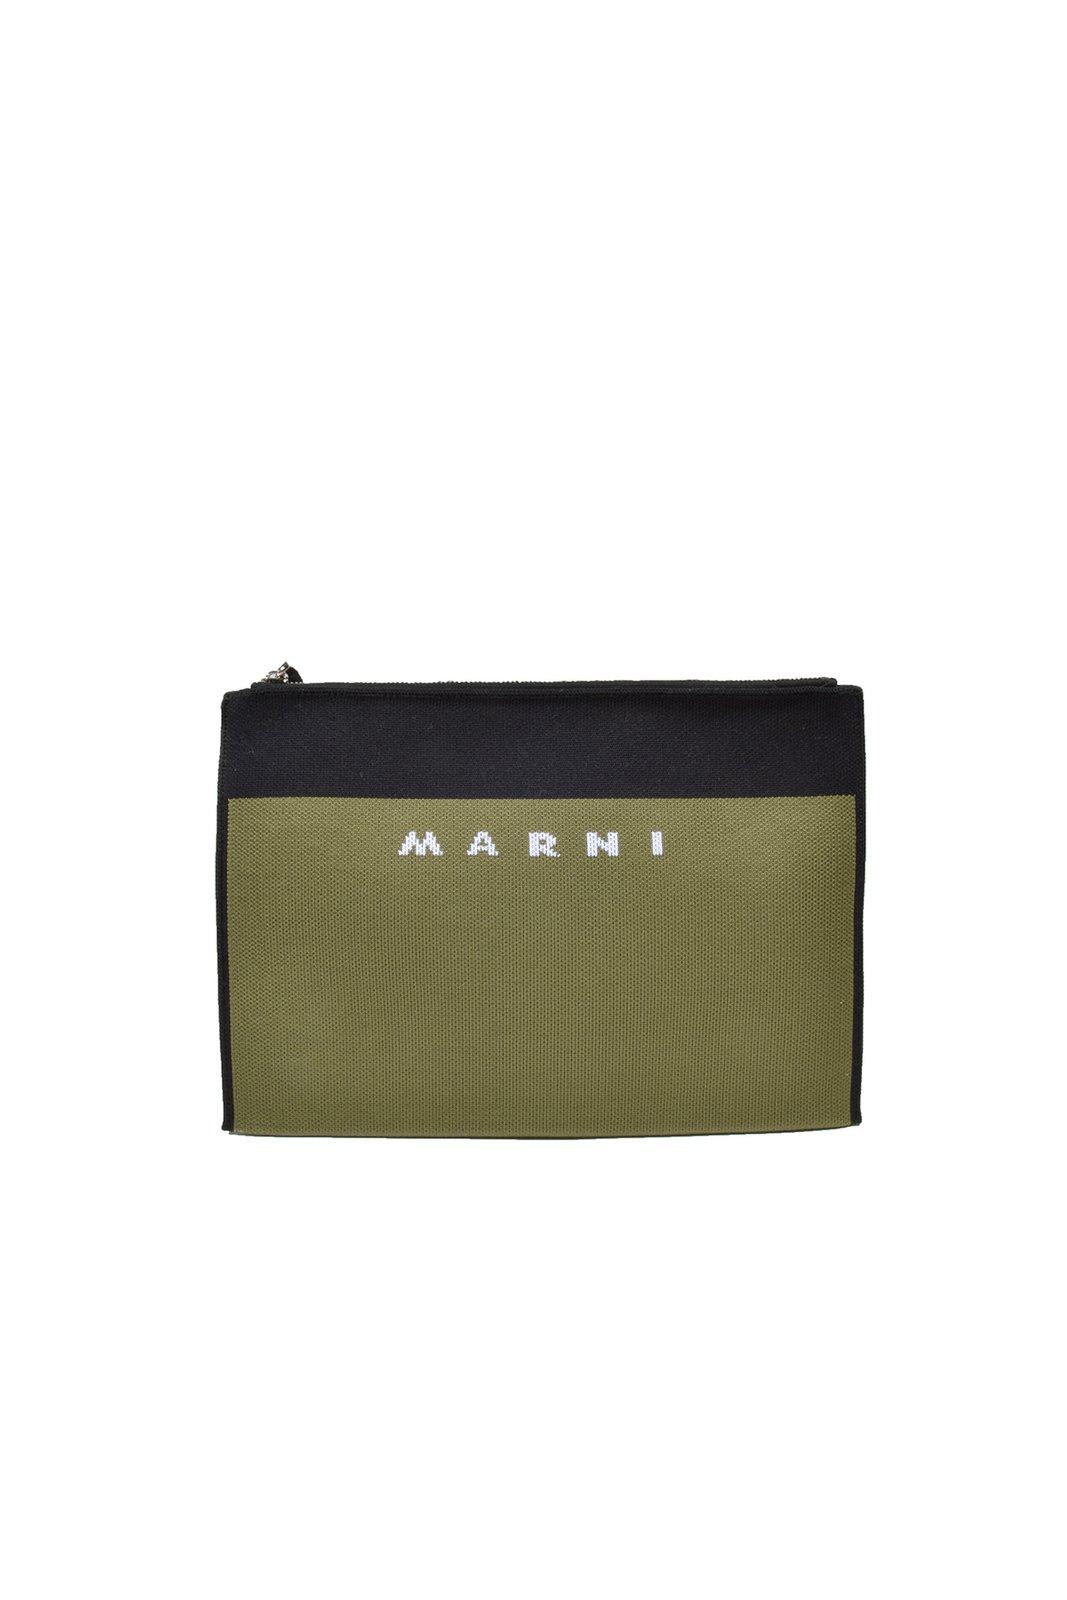 Marni Logo Embroidered Zip Clutch Bag